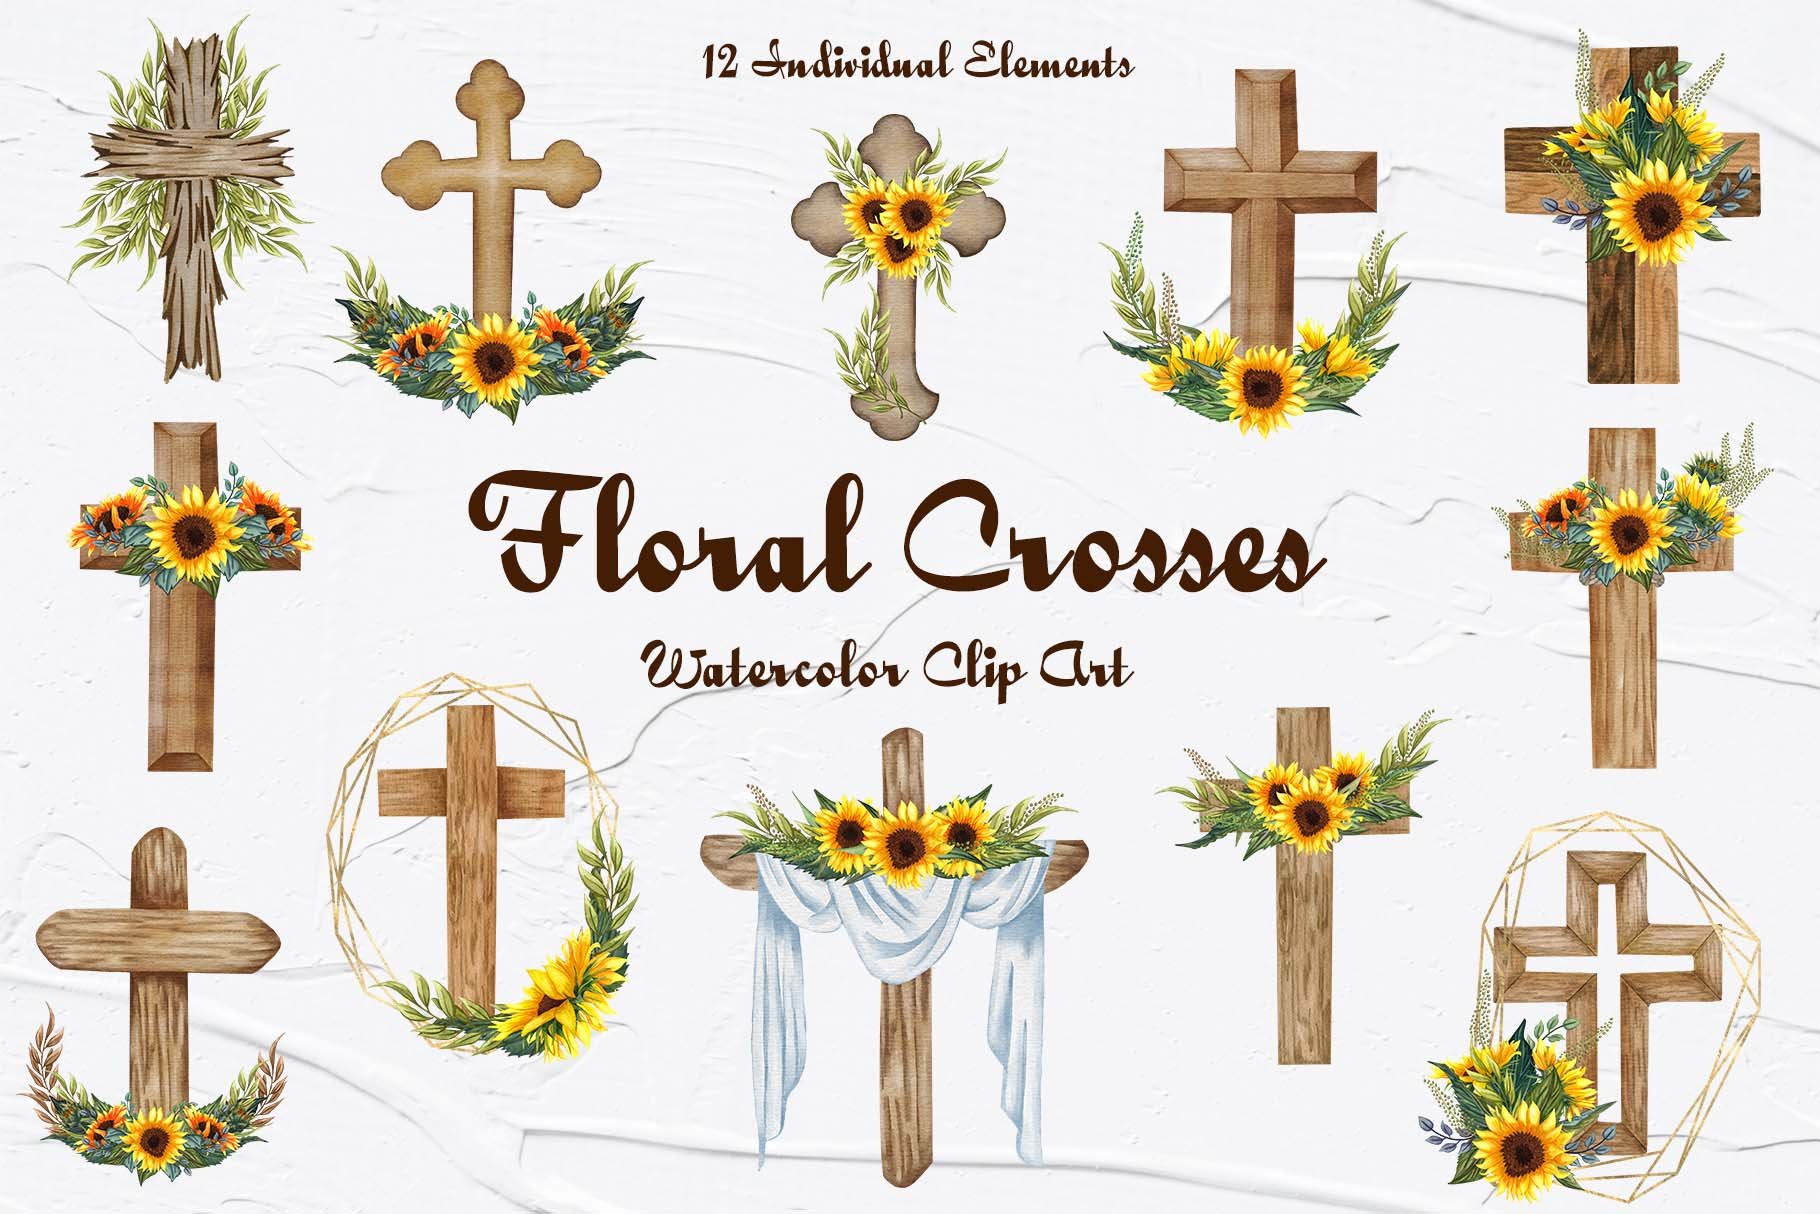 Rustic Wood Cross clipart, Watercolor Floral Crosses clipart